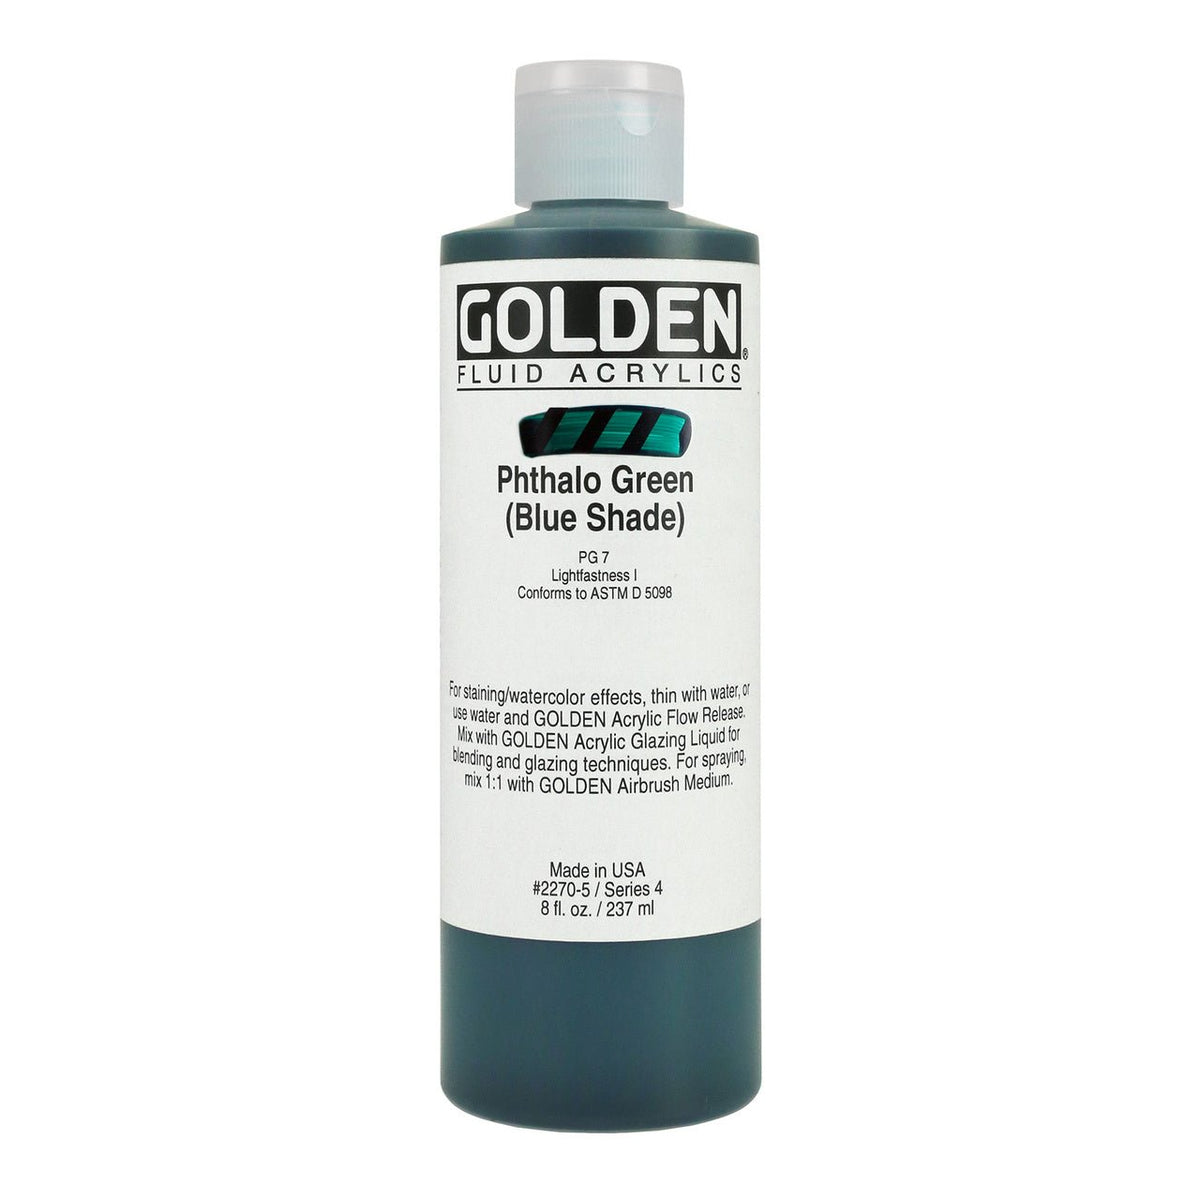 Golden Fluid Acrylic Phthalo Green (blue shade) 8 oz - merriartist.com